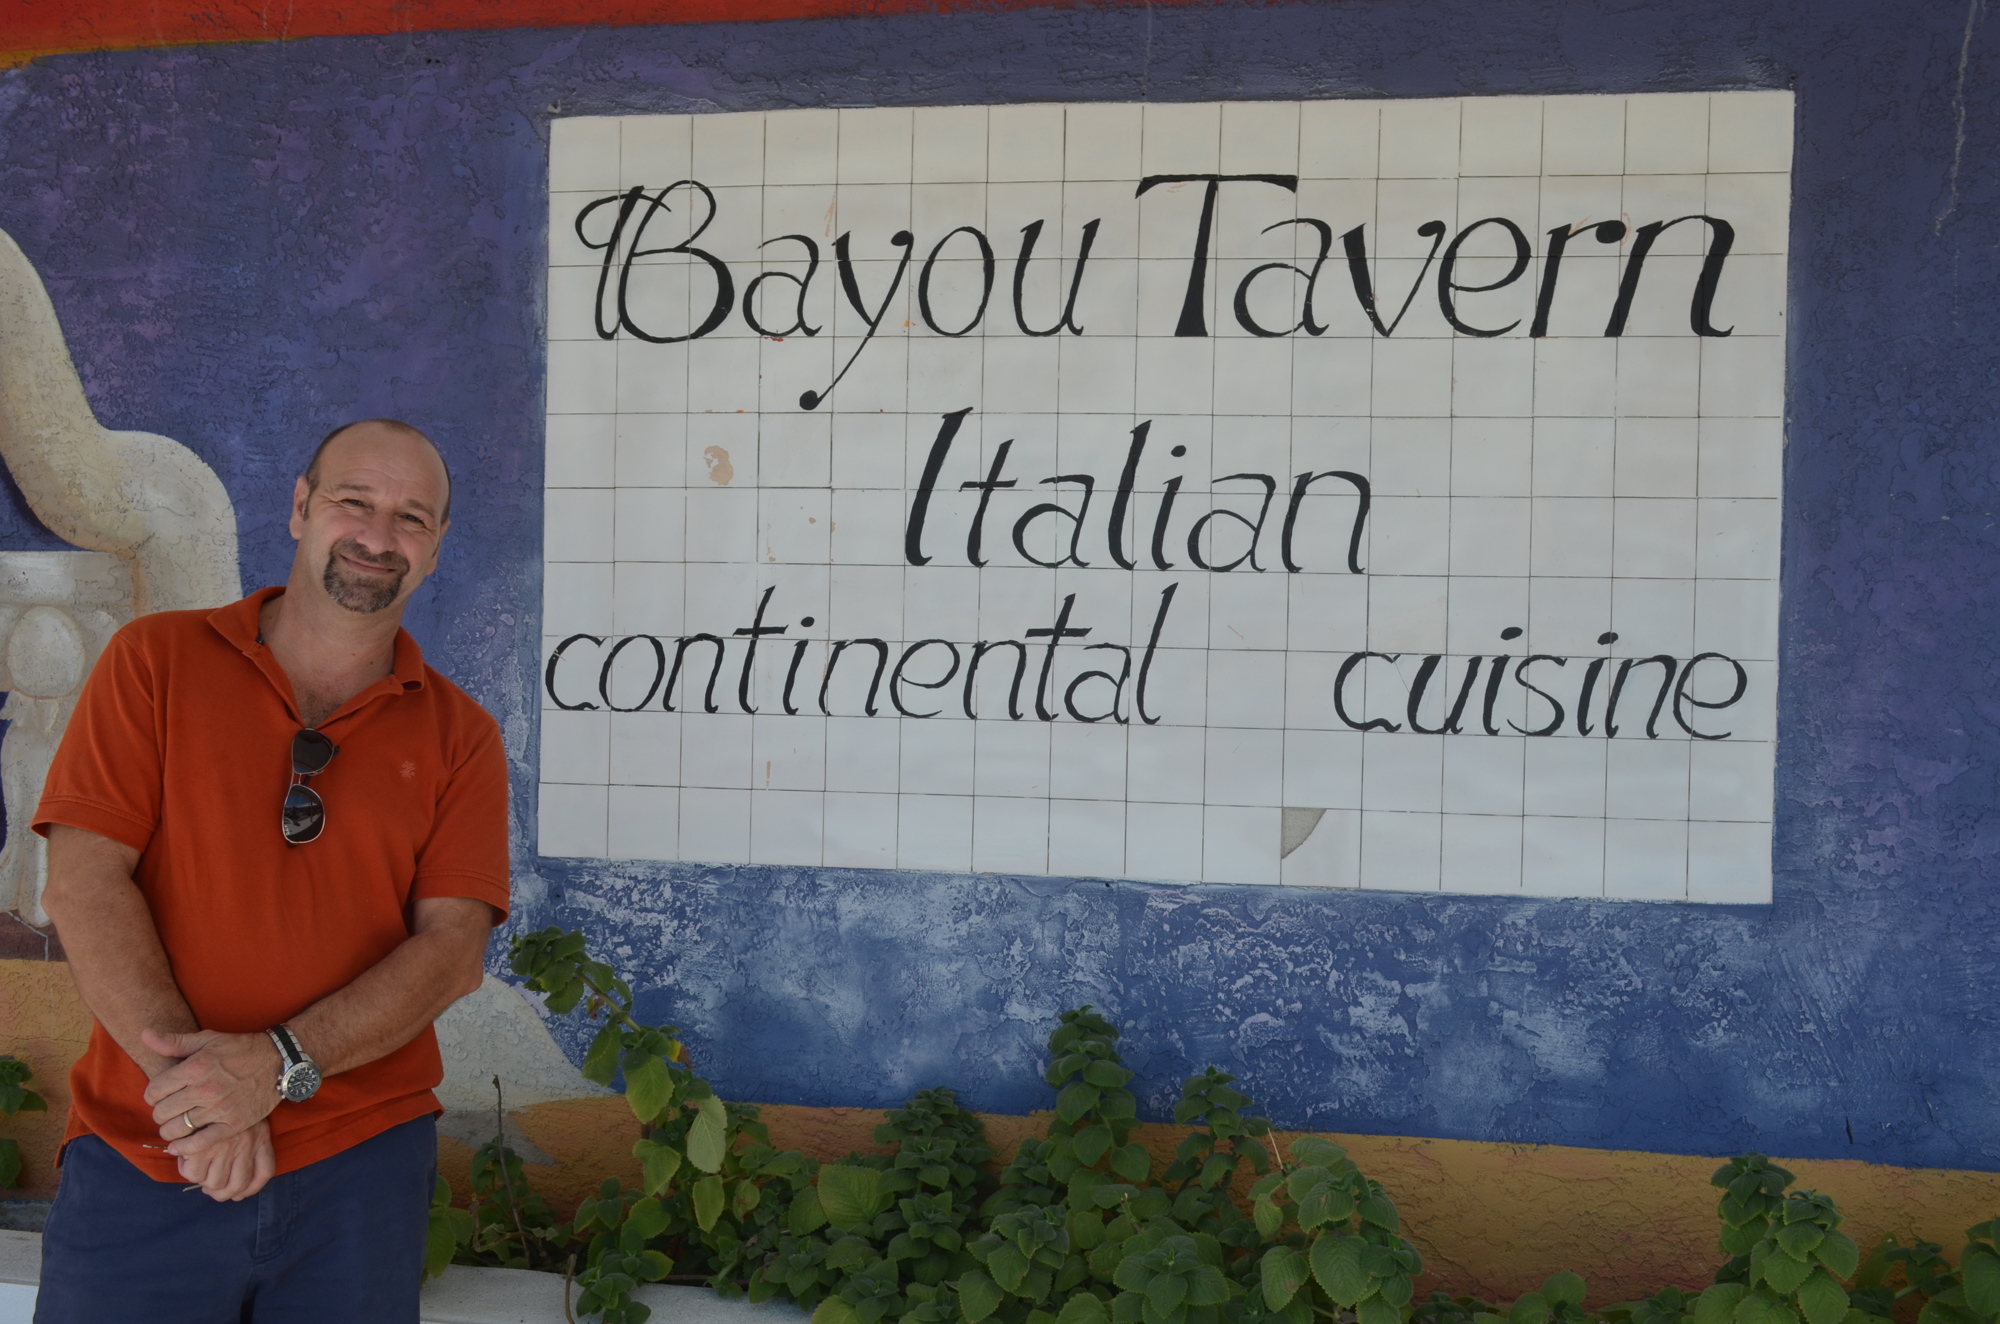 Bayou Tavern owner and chef Anthony Chiroli